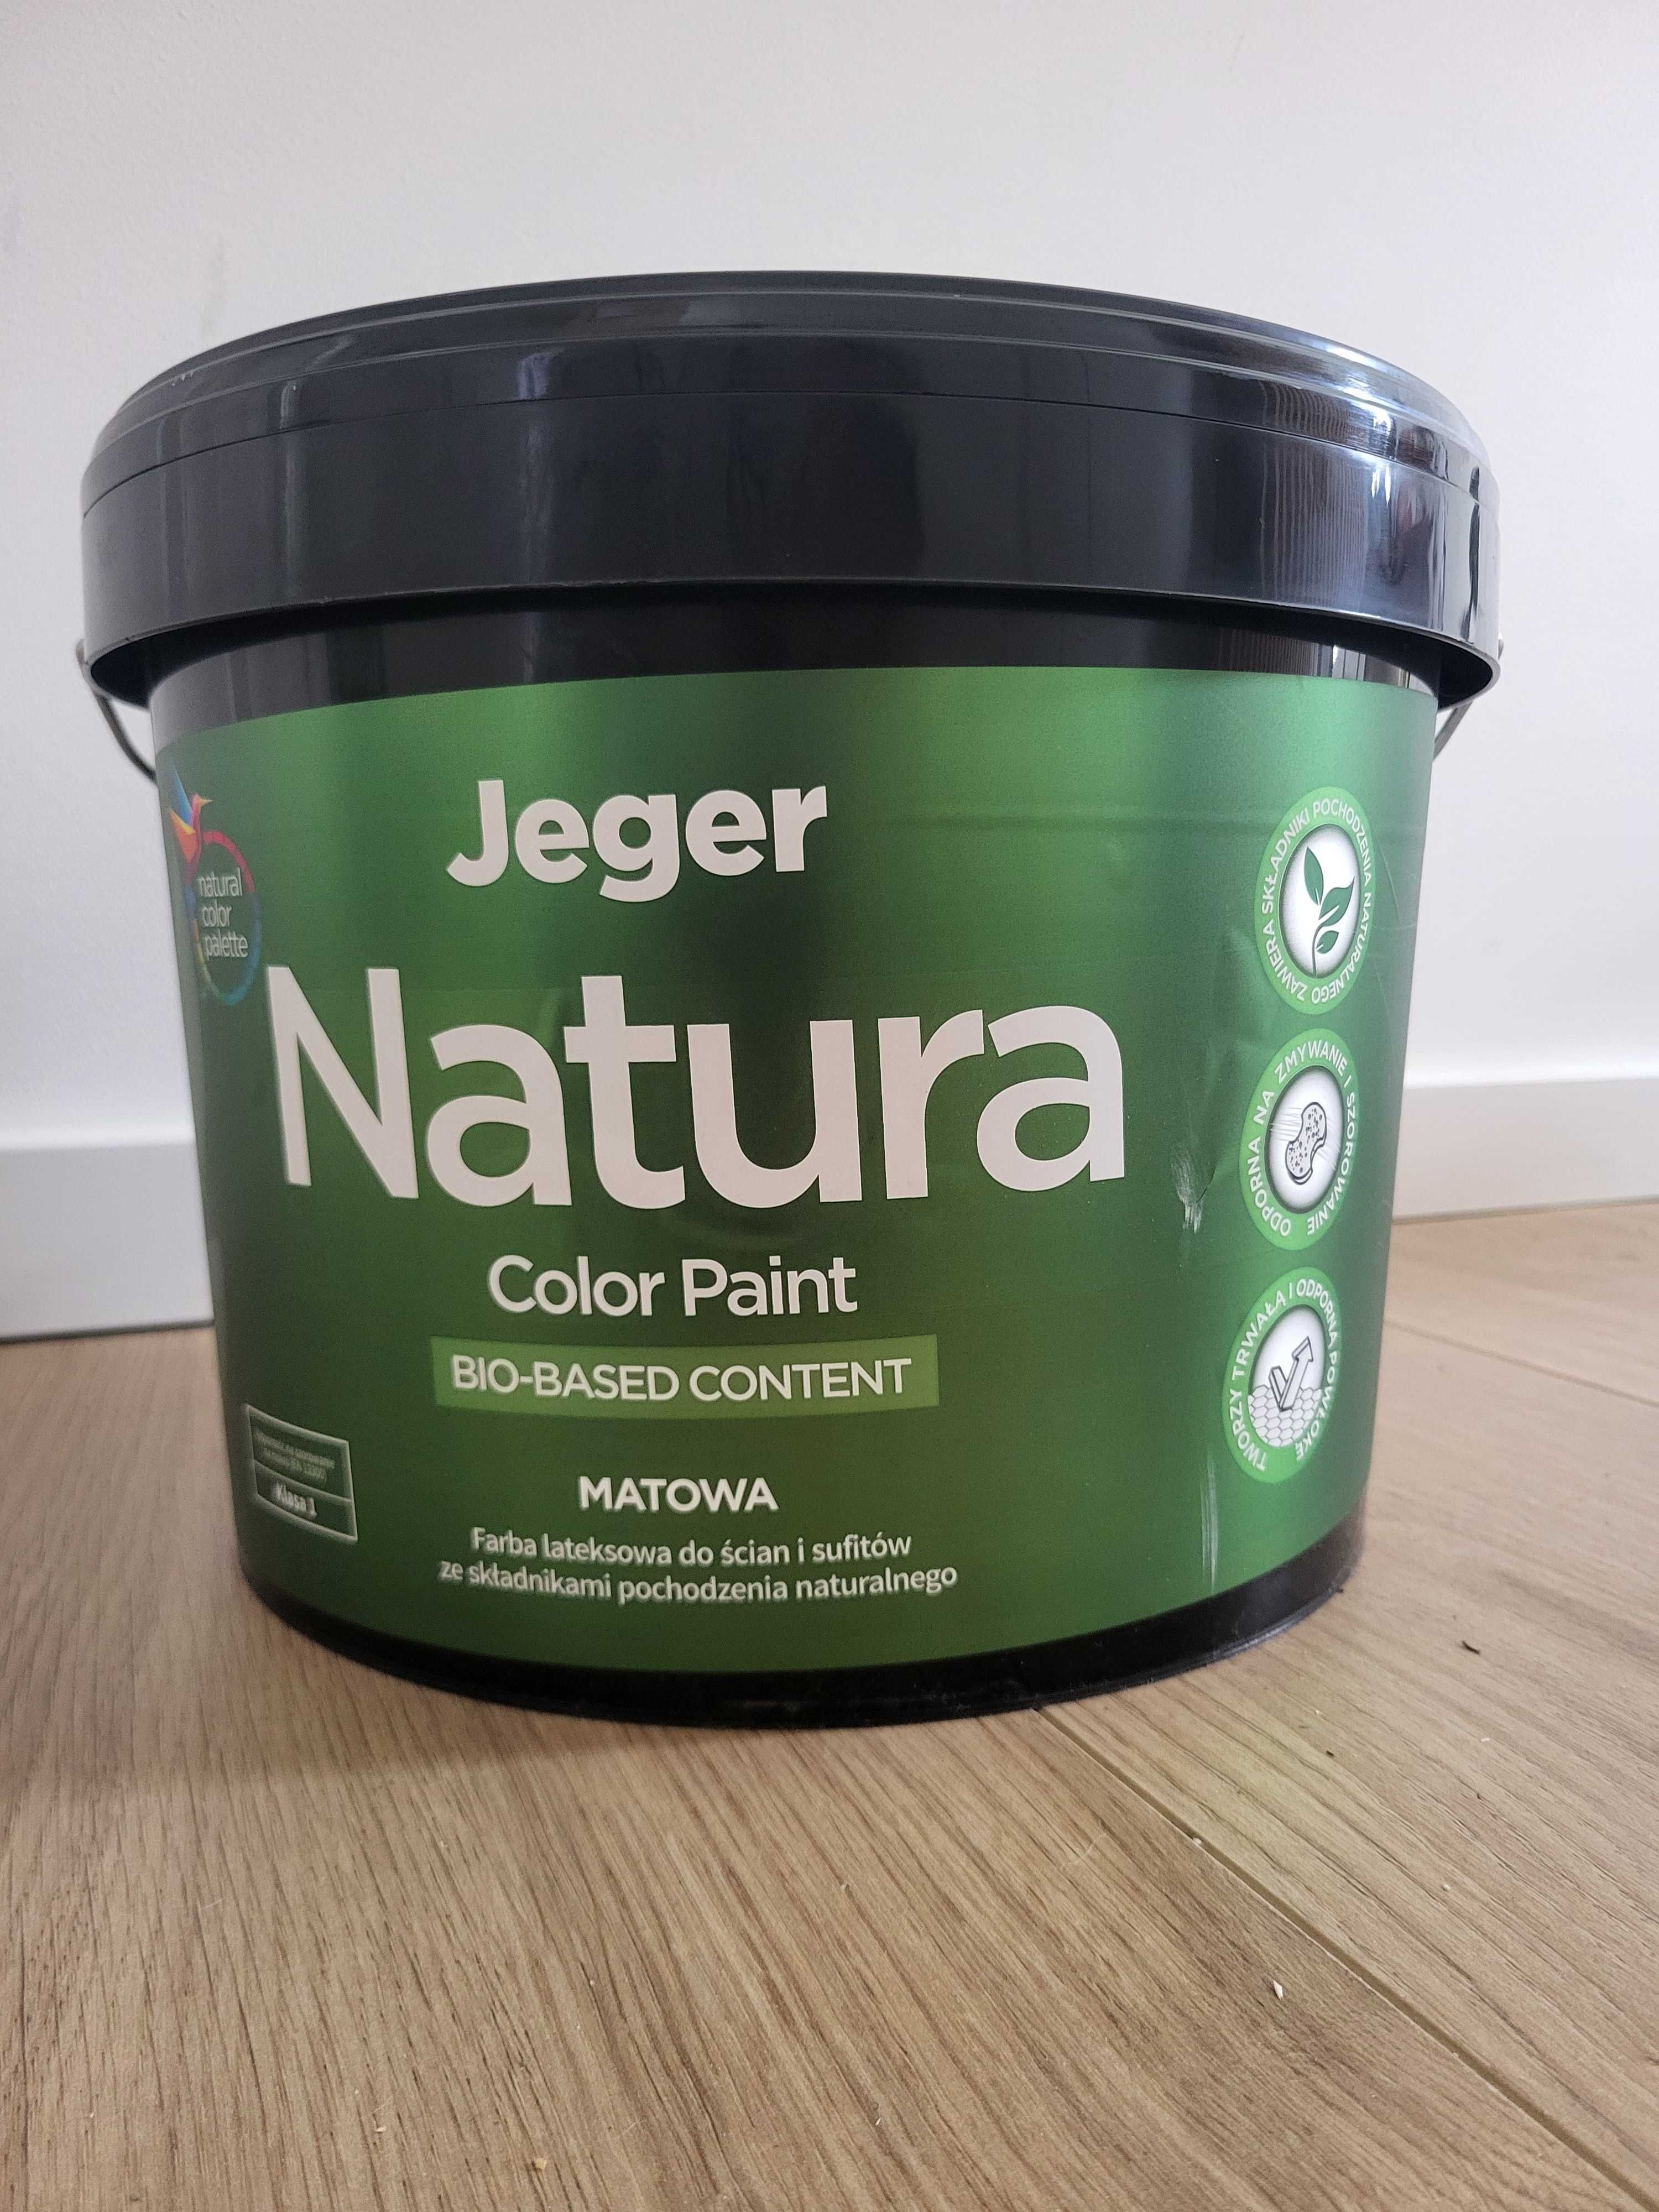 Jeger Natura Color Paint matowa 9l baza c